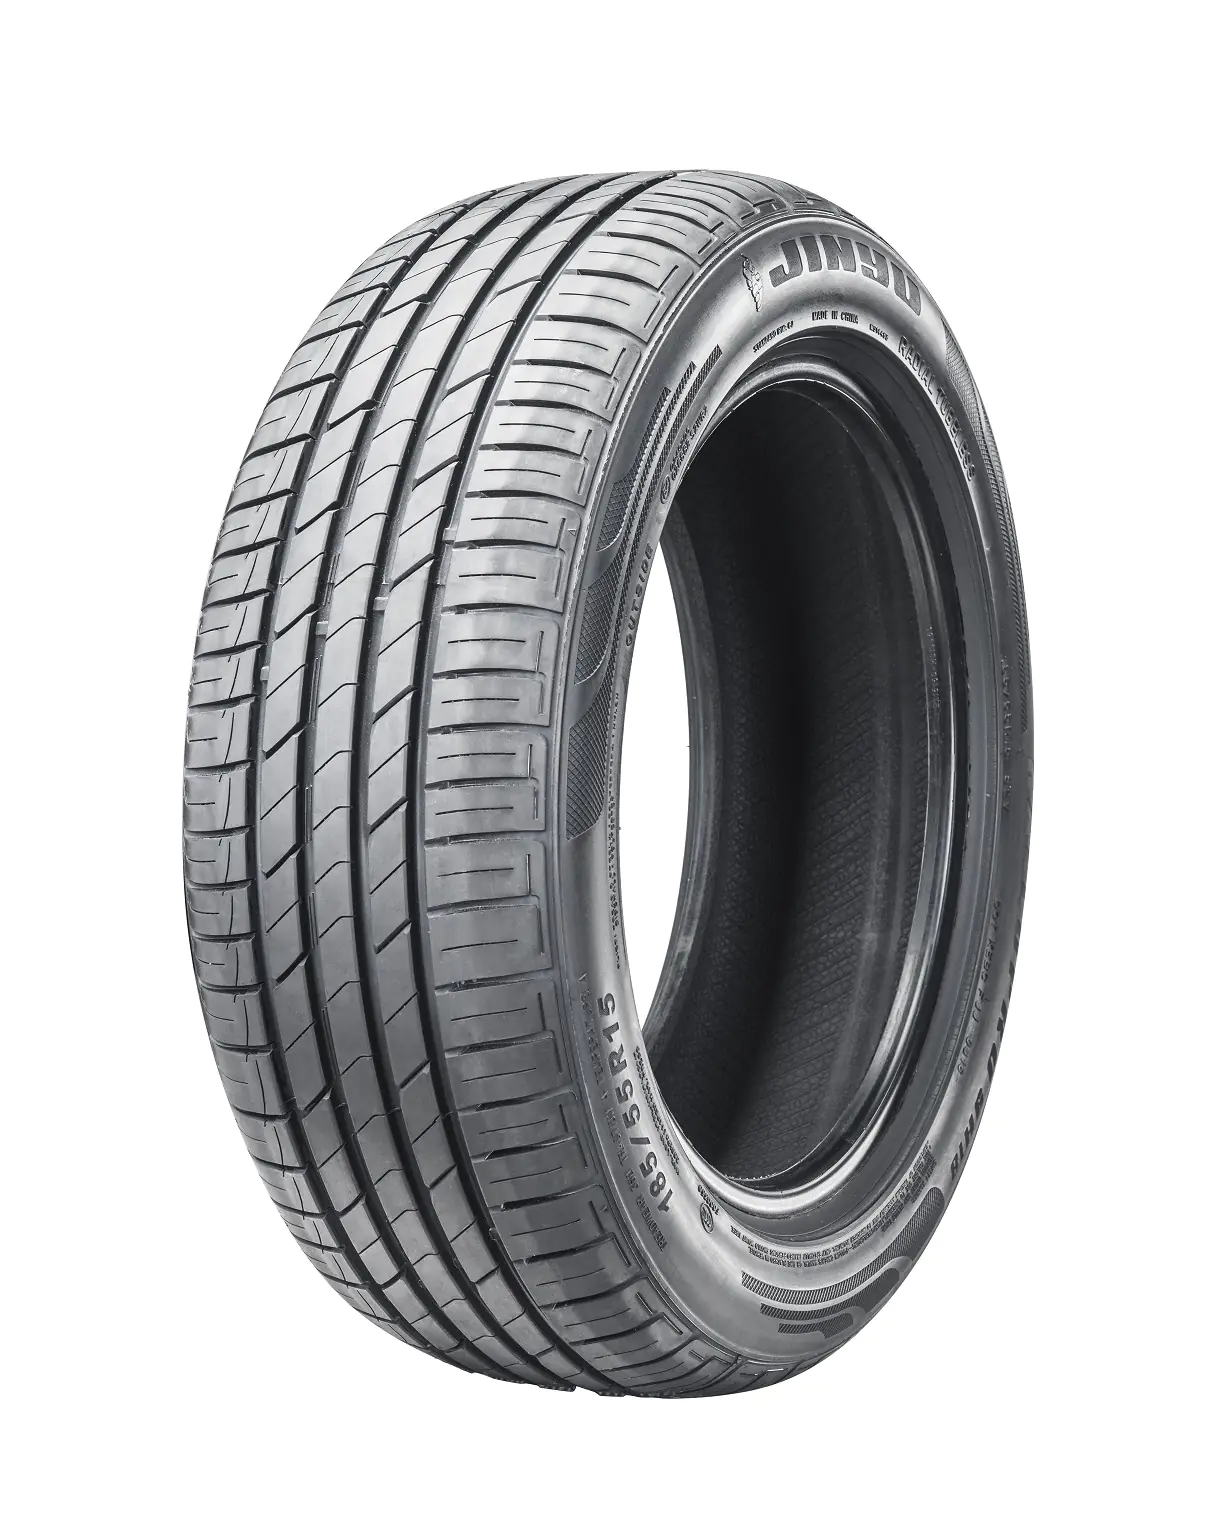 Jinyu Tyres Jinyu Tyres 205/60 R15 95V YH 18 XL pneumatici nuovi Estivo 